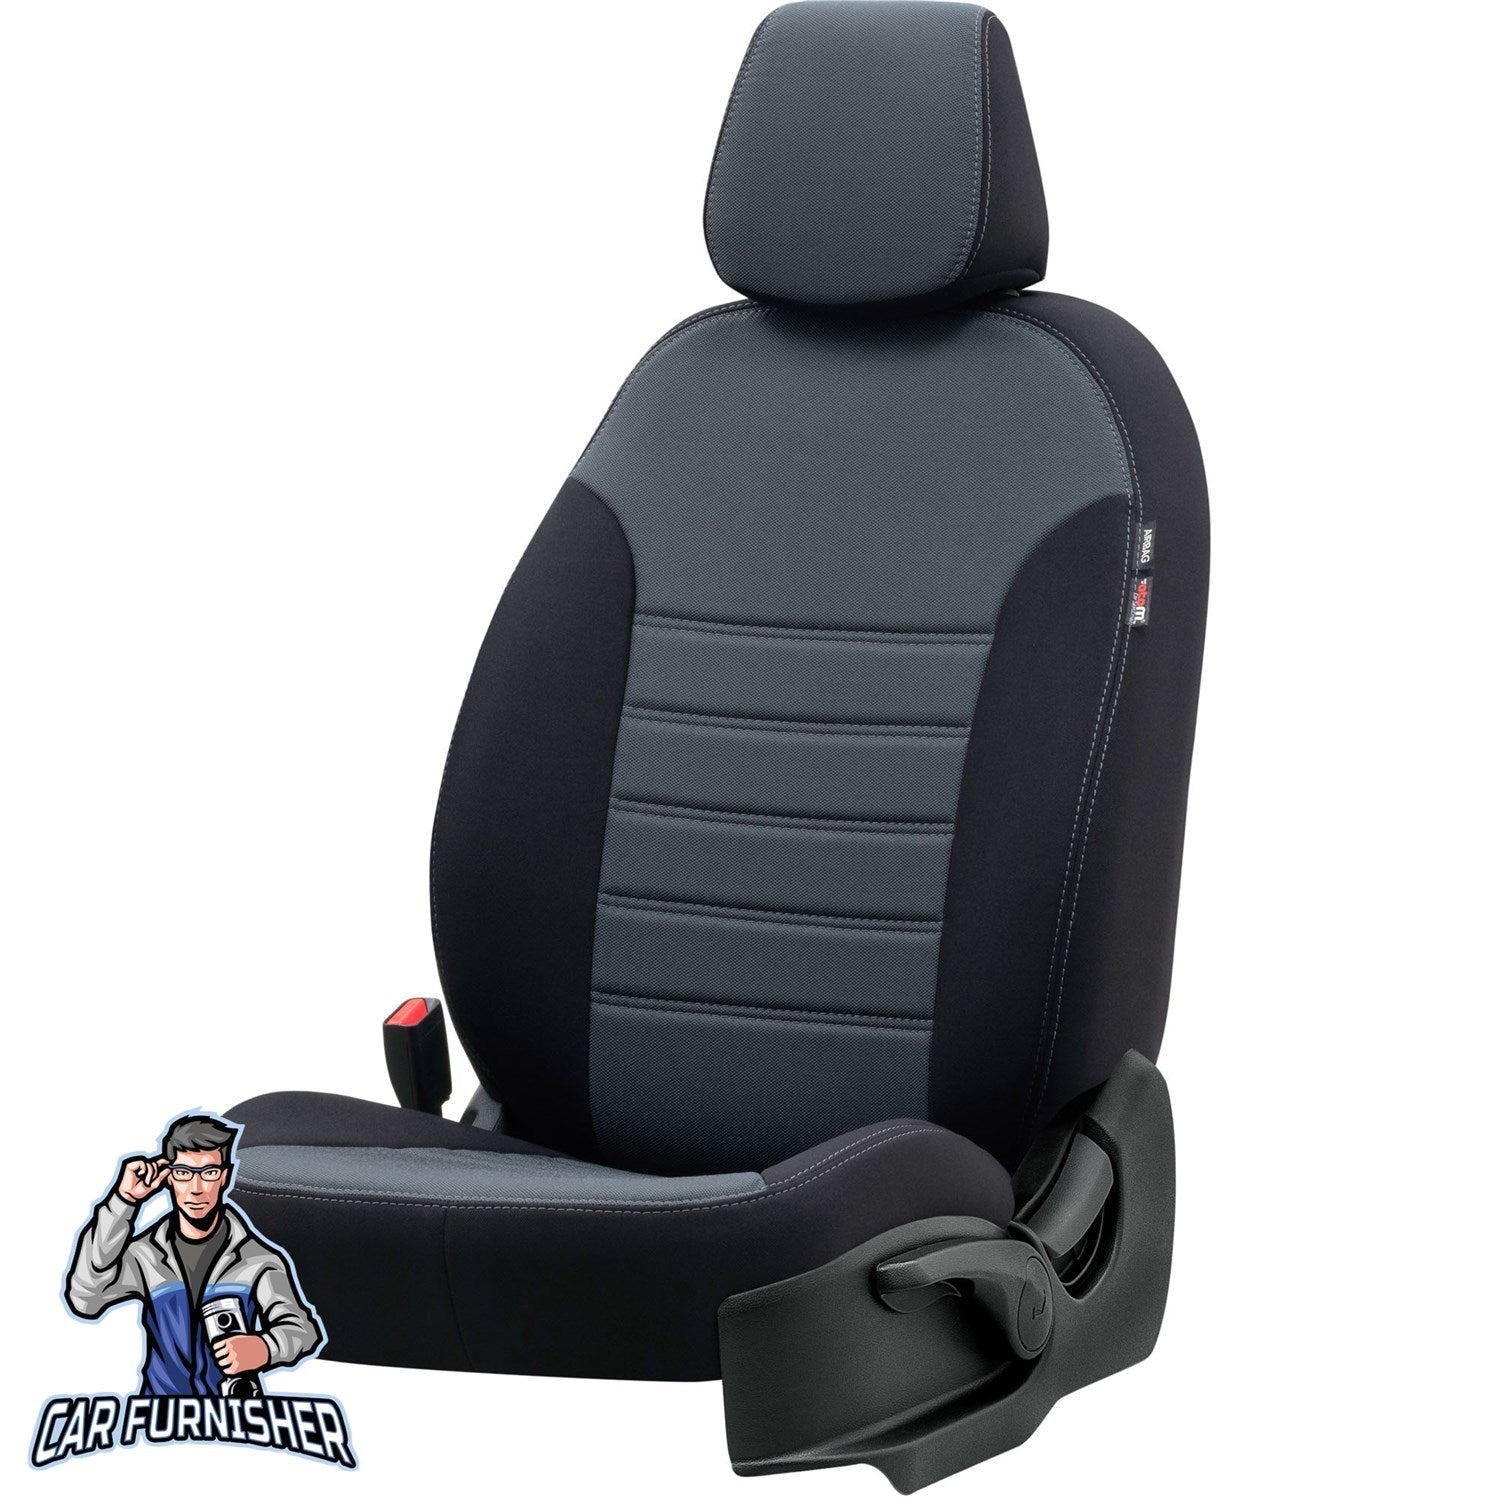 Skoda Octavia Car Seat Covers 1999-2023 Original Design Smoked Black Full Set (5 Seats + Handrest) Fabric